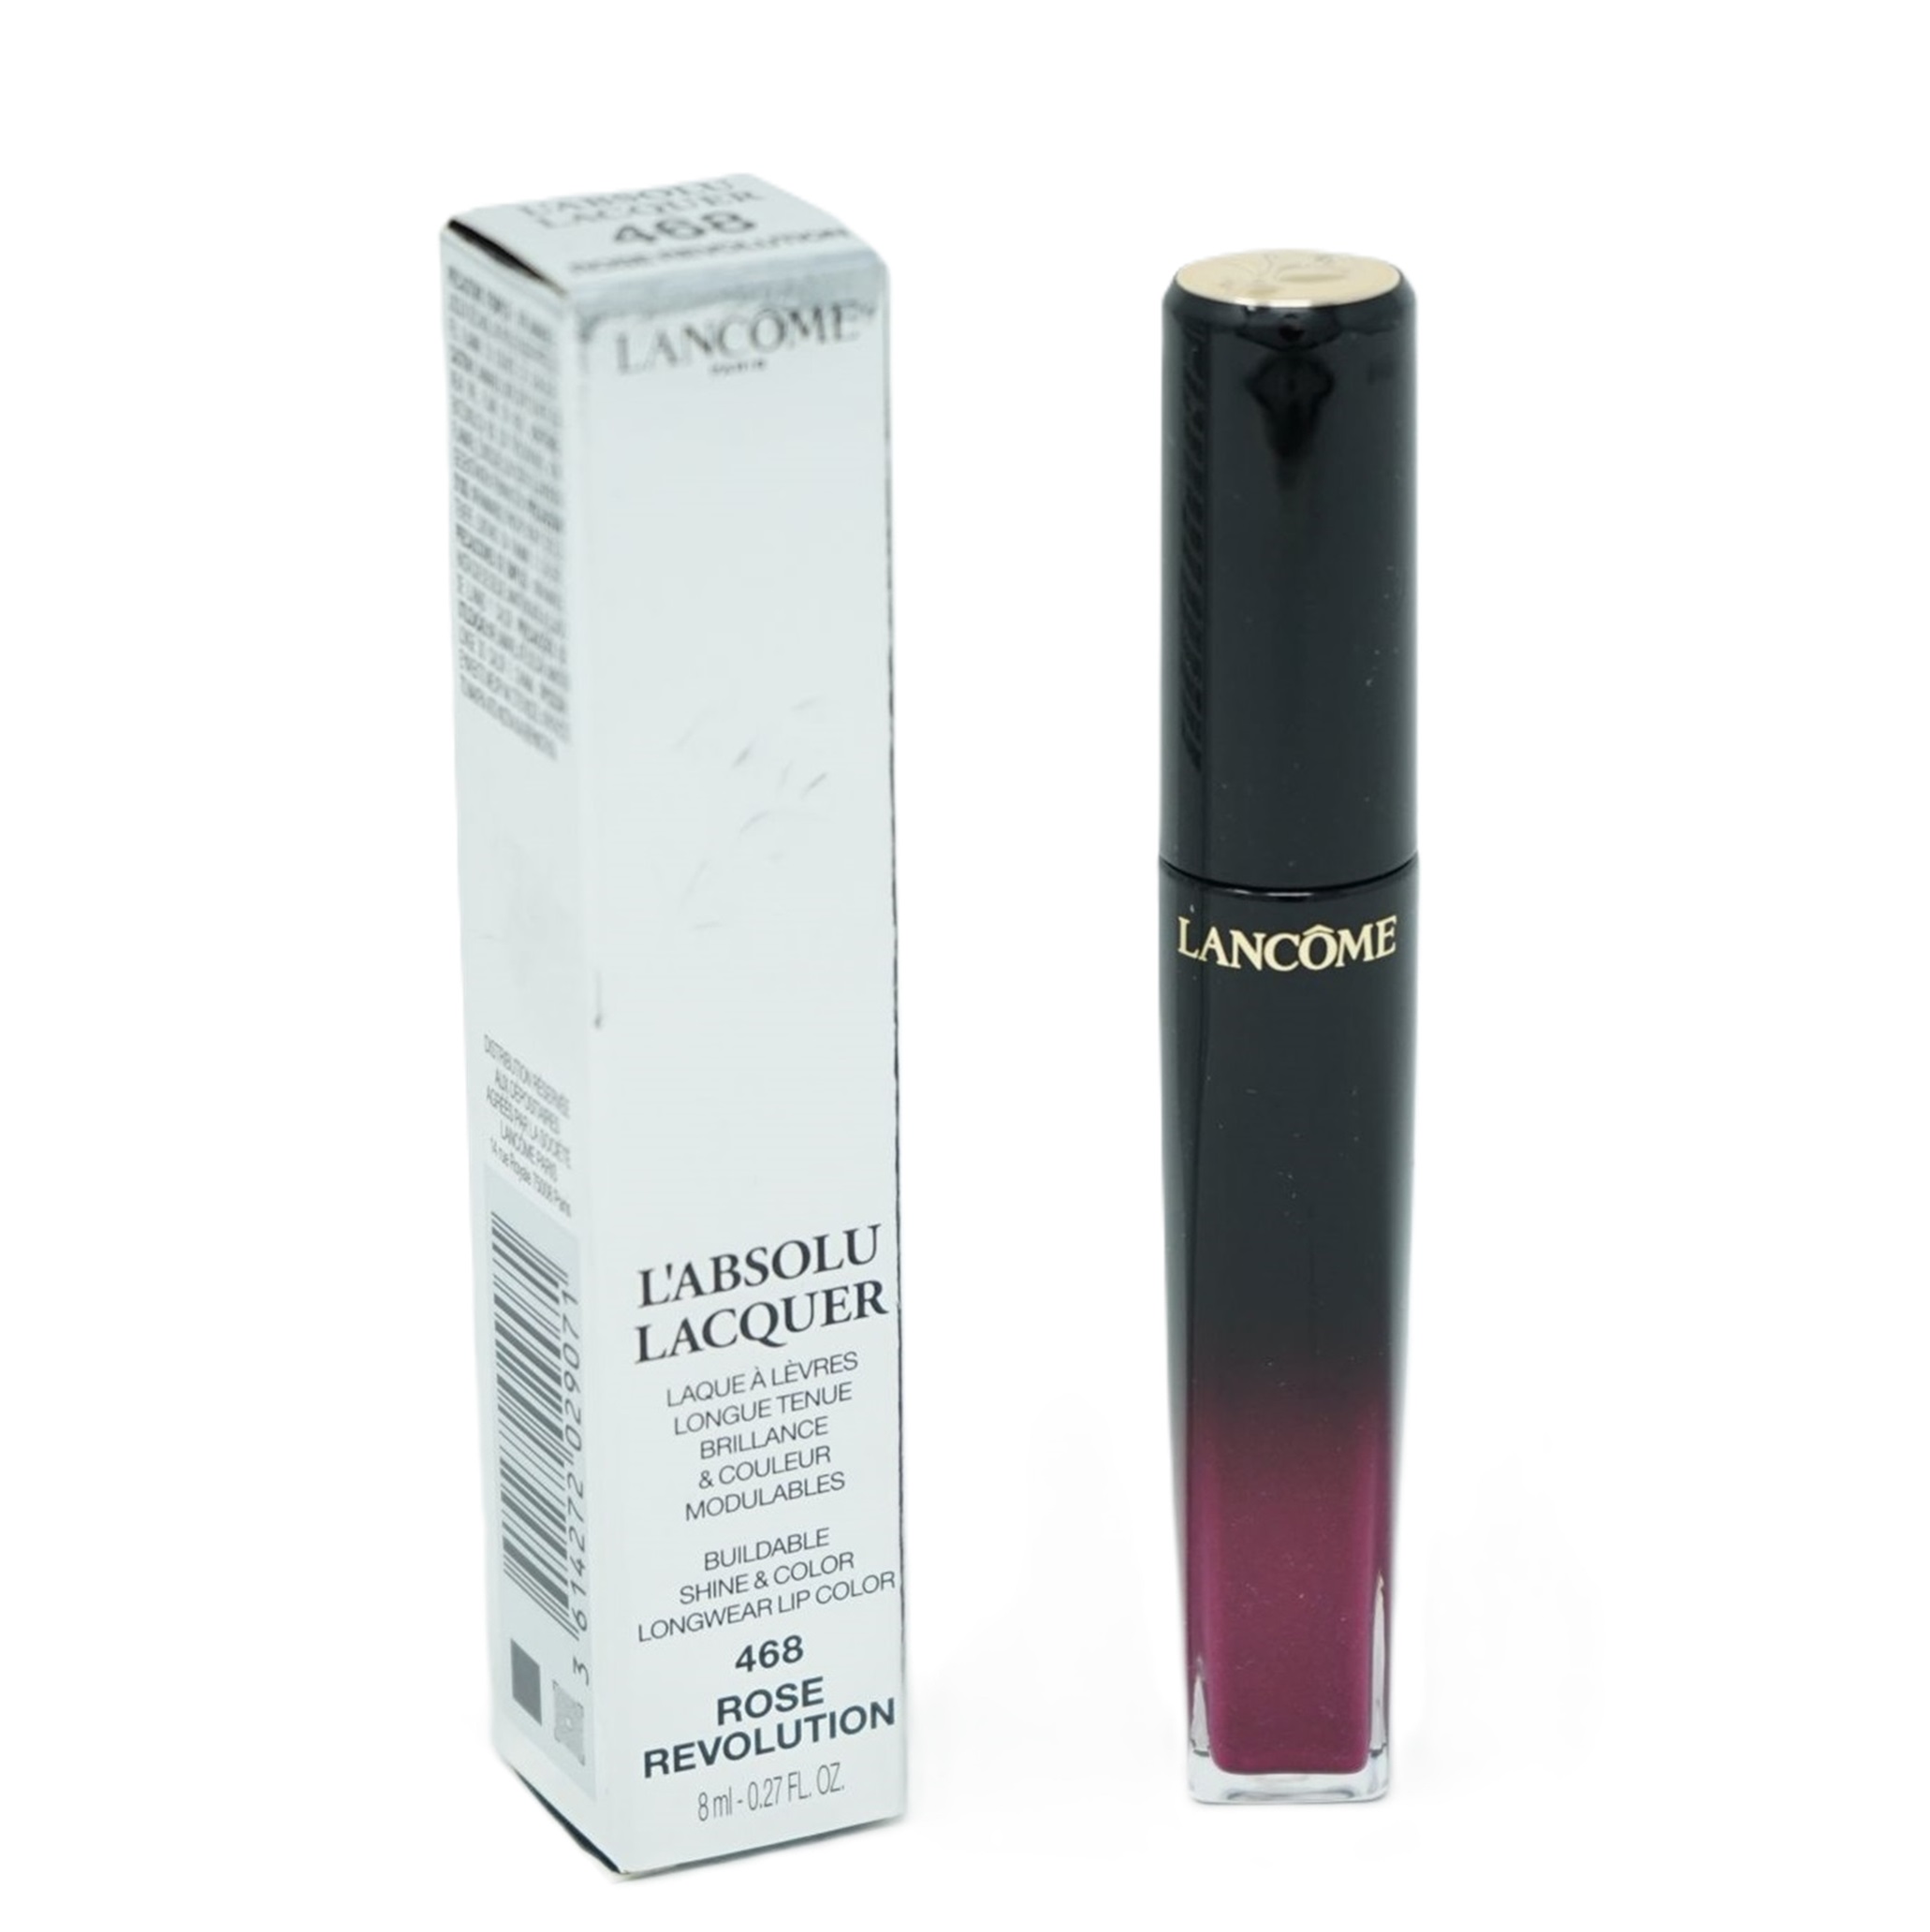 LANCOME L Absolu liquid Lipgloss 468 Rose Revolution